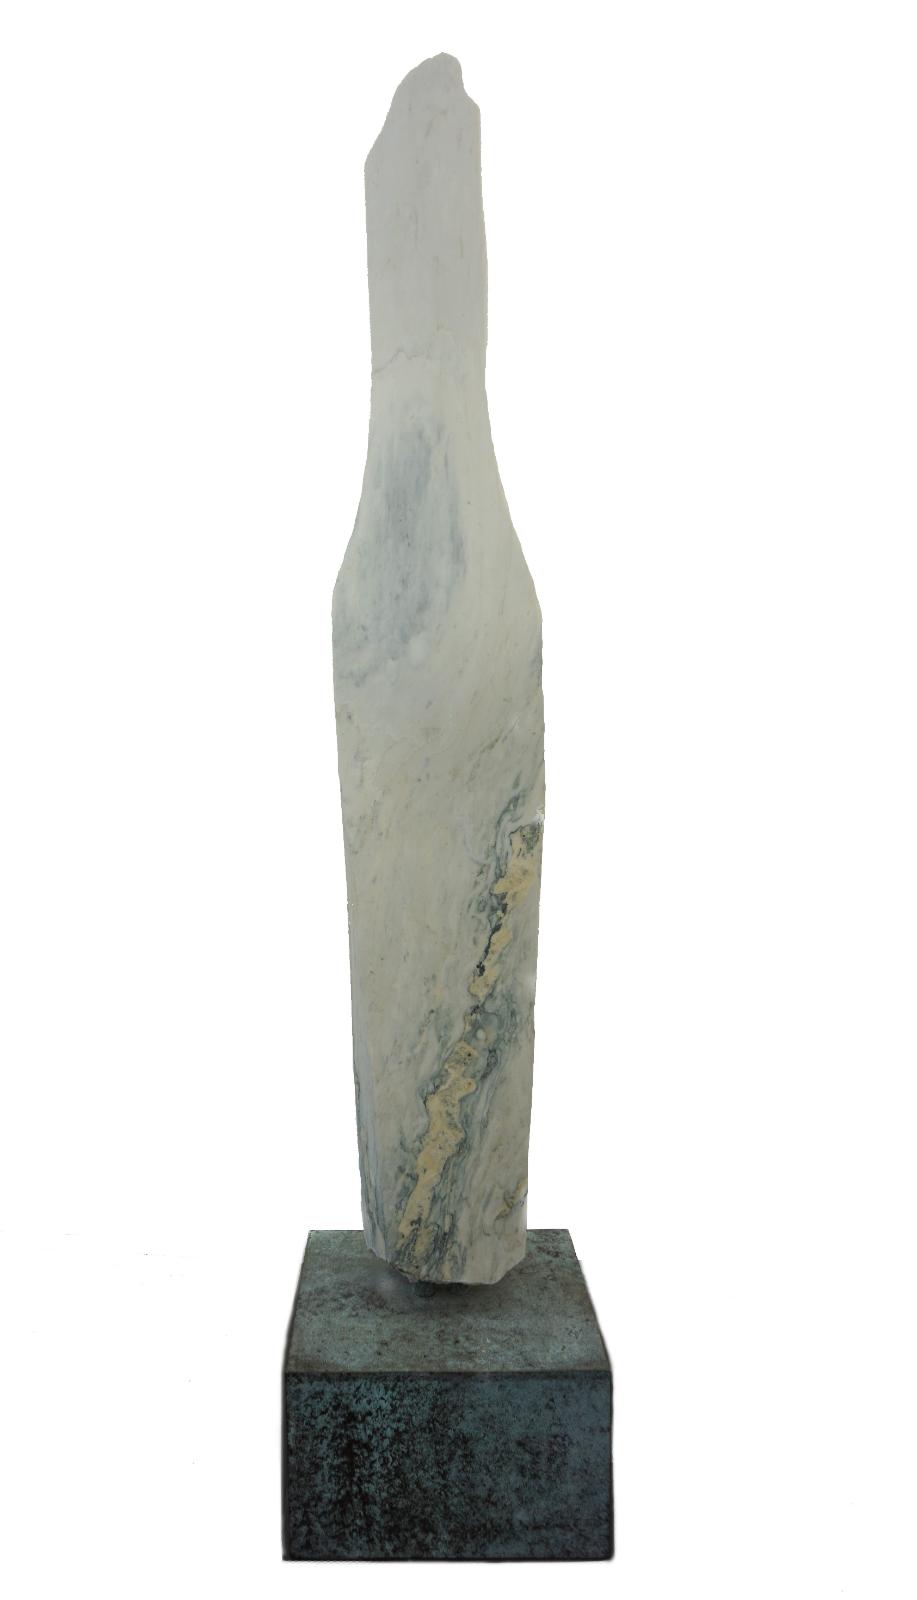 Rudolf Kurz, „Torso“, 2017, Marmor/Messing, 154 cm (Höhe), kur003ko